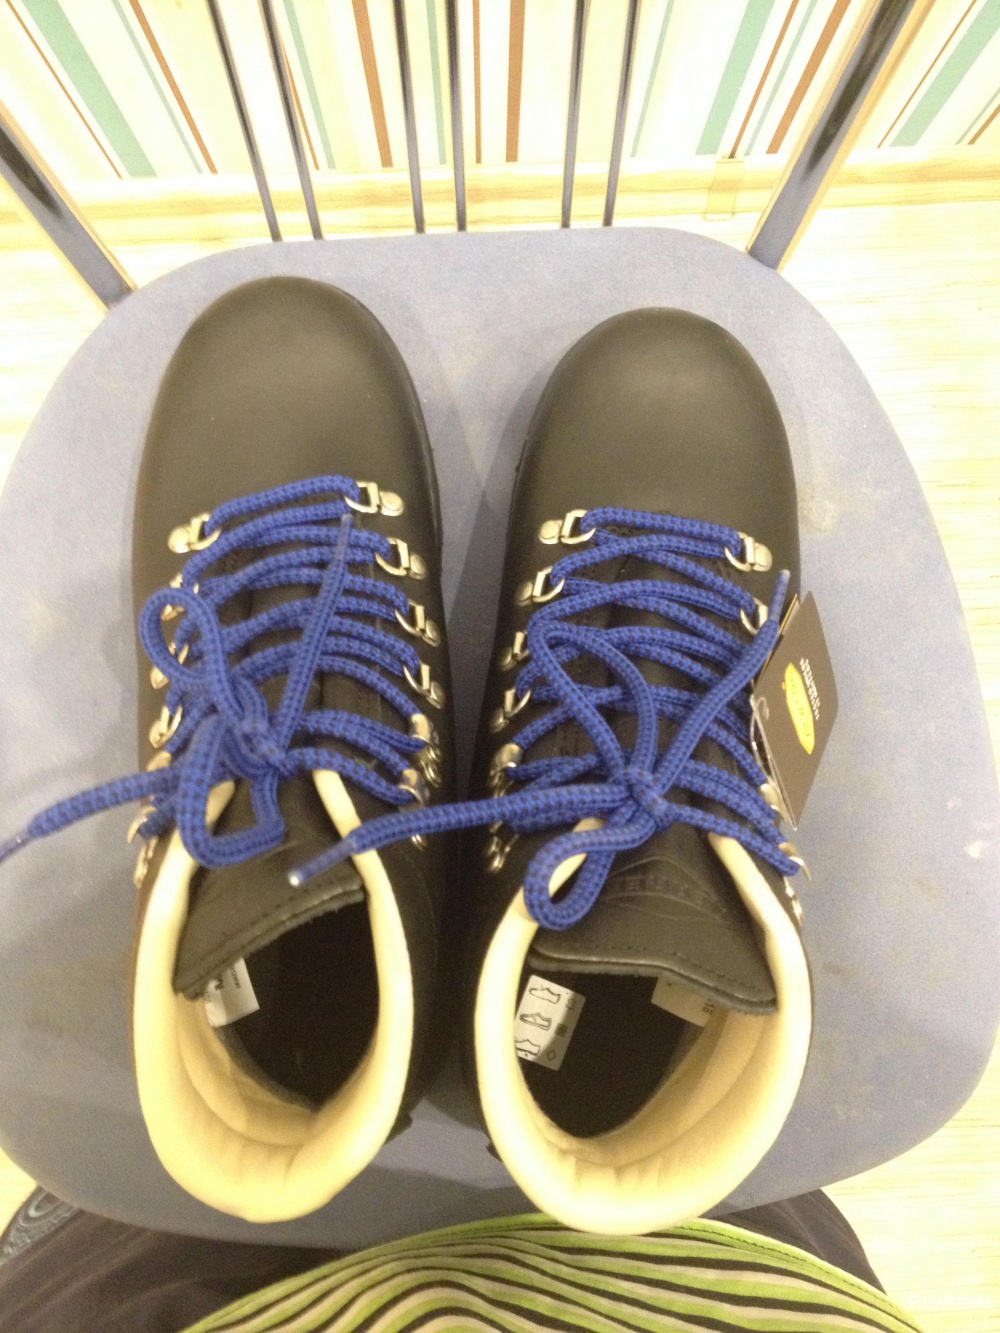 Мужские зимние ботинки Merrell, производство Италия